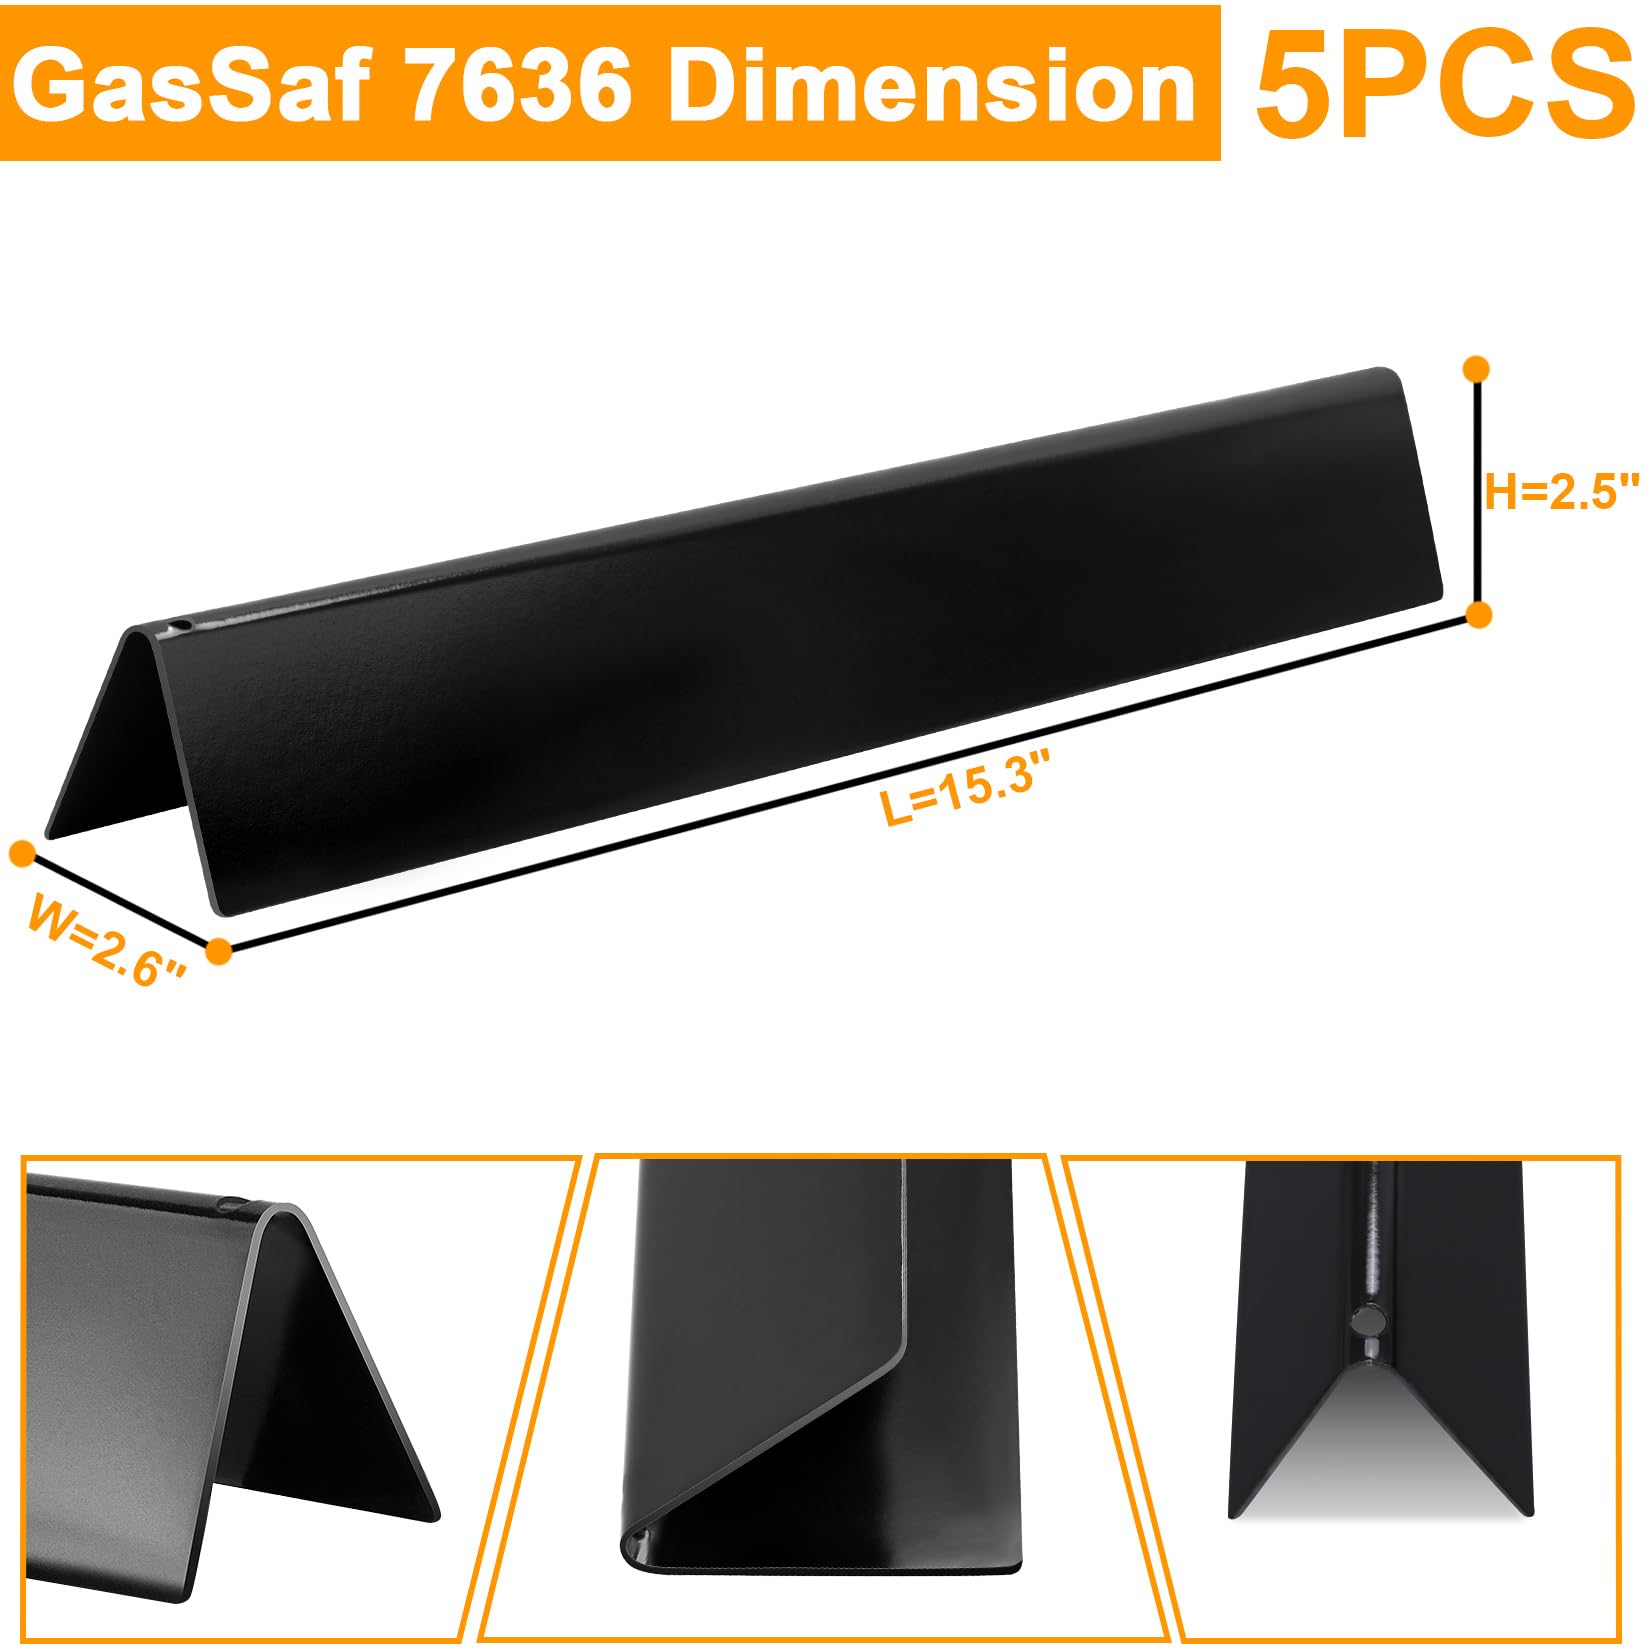 GasSaf 15.3 inch Flavorizer Bars Replacement for Weber 7636, Spirit I & Spirit II 300 S310 S320 E310 E320, Weber 46510001, 47513